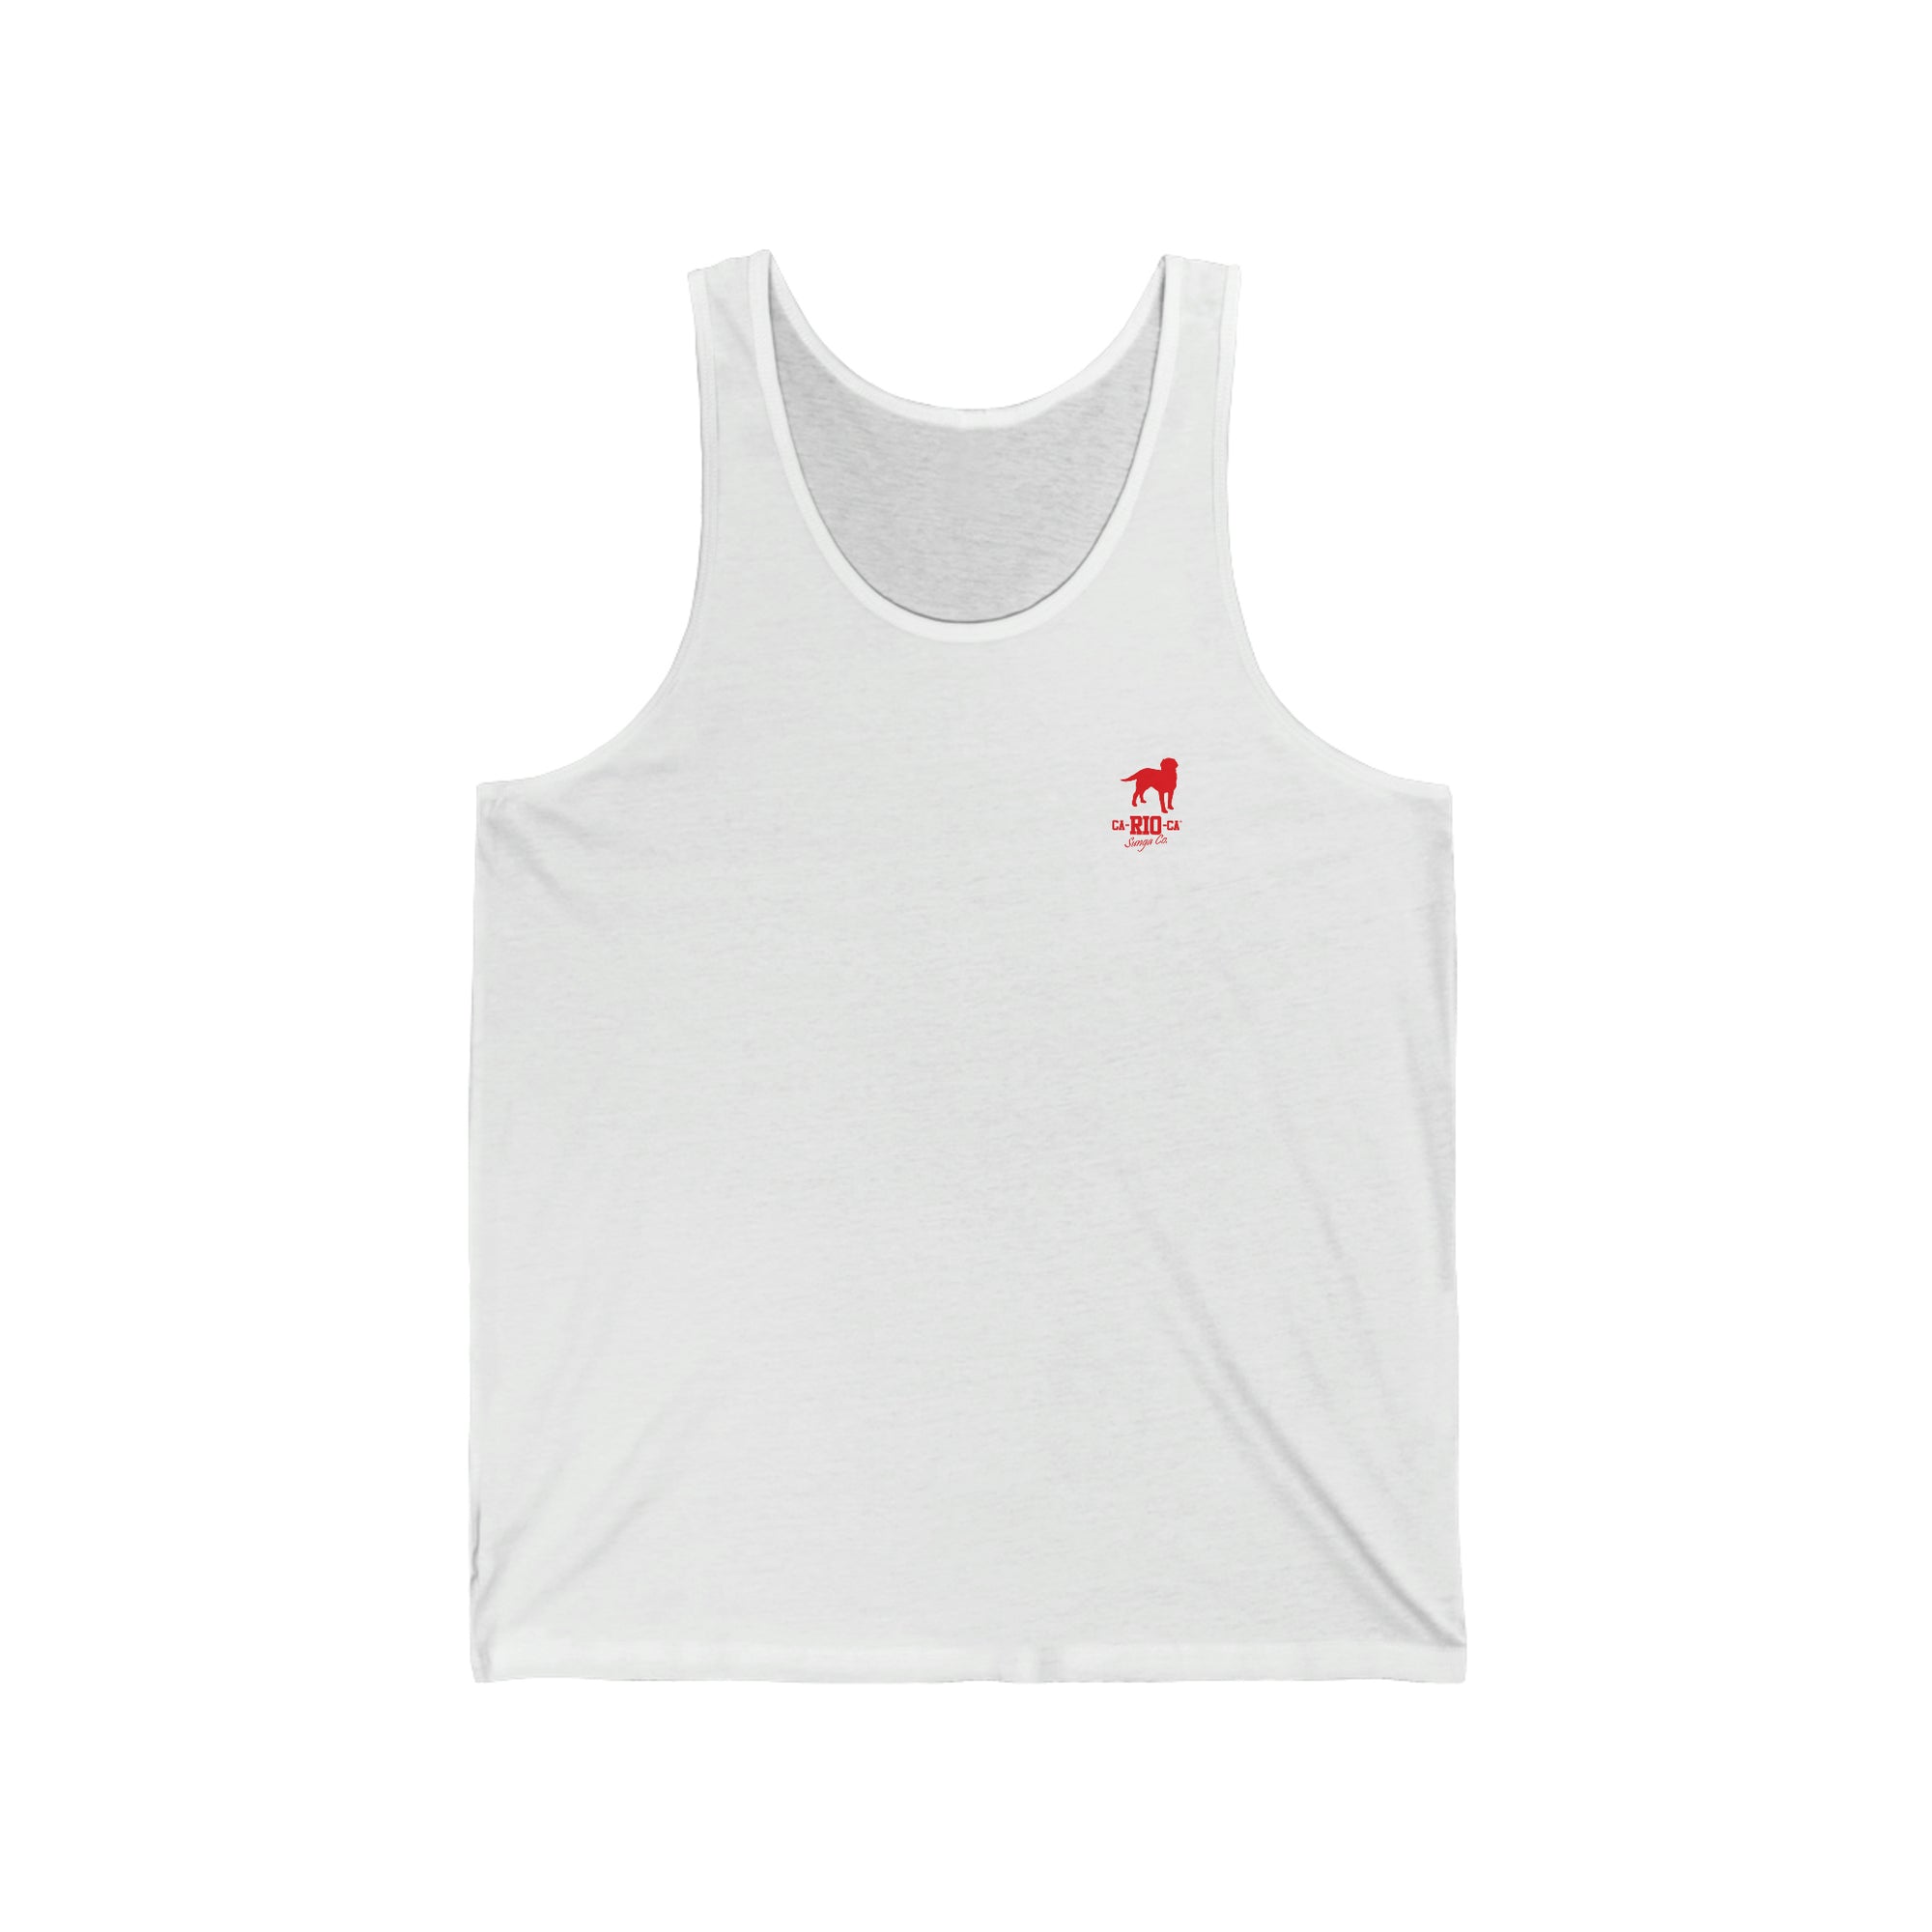 CA-RIO-CA Logo Red Print Tank Top - Camiseta de tirantes hombre